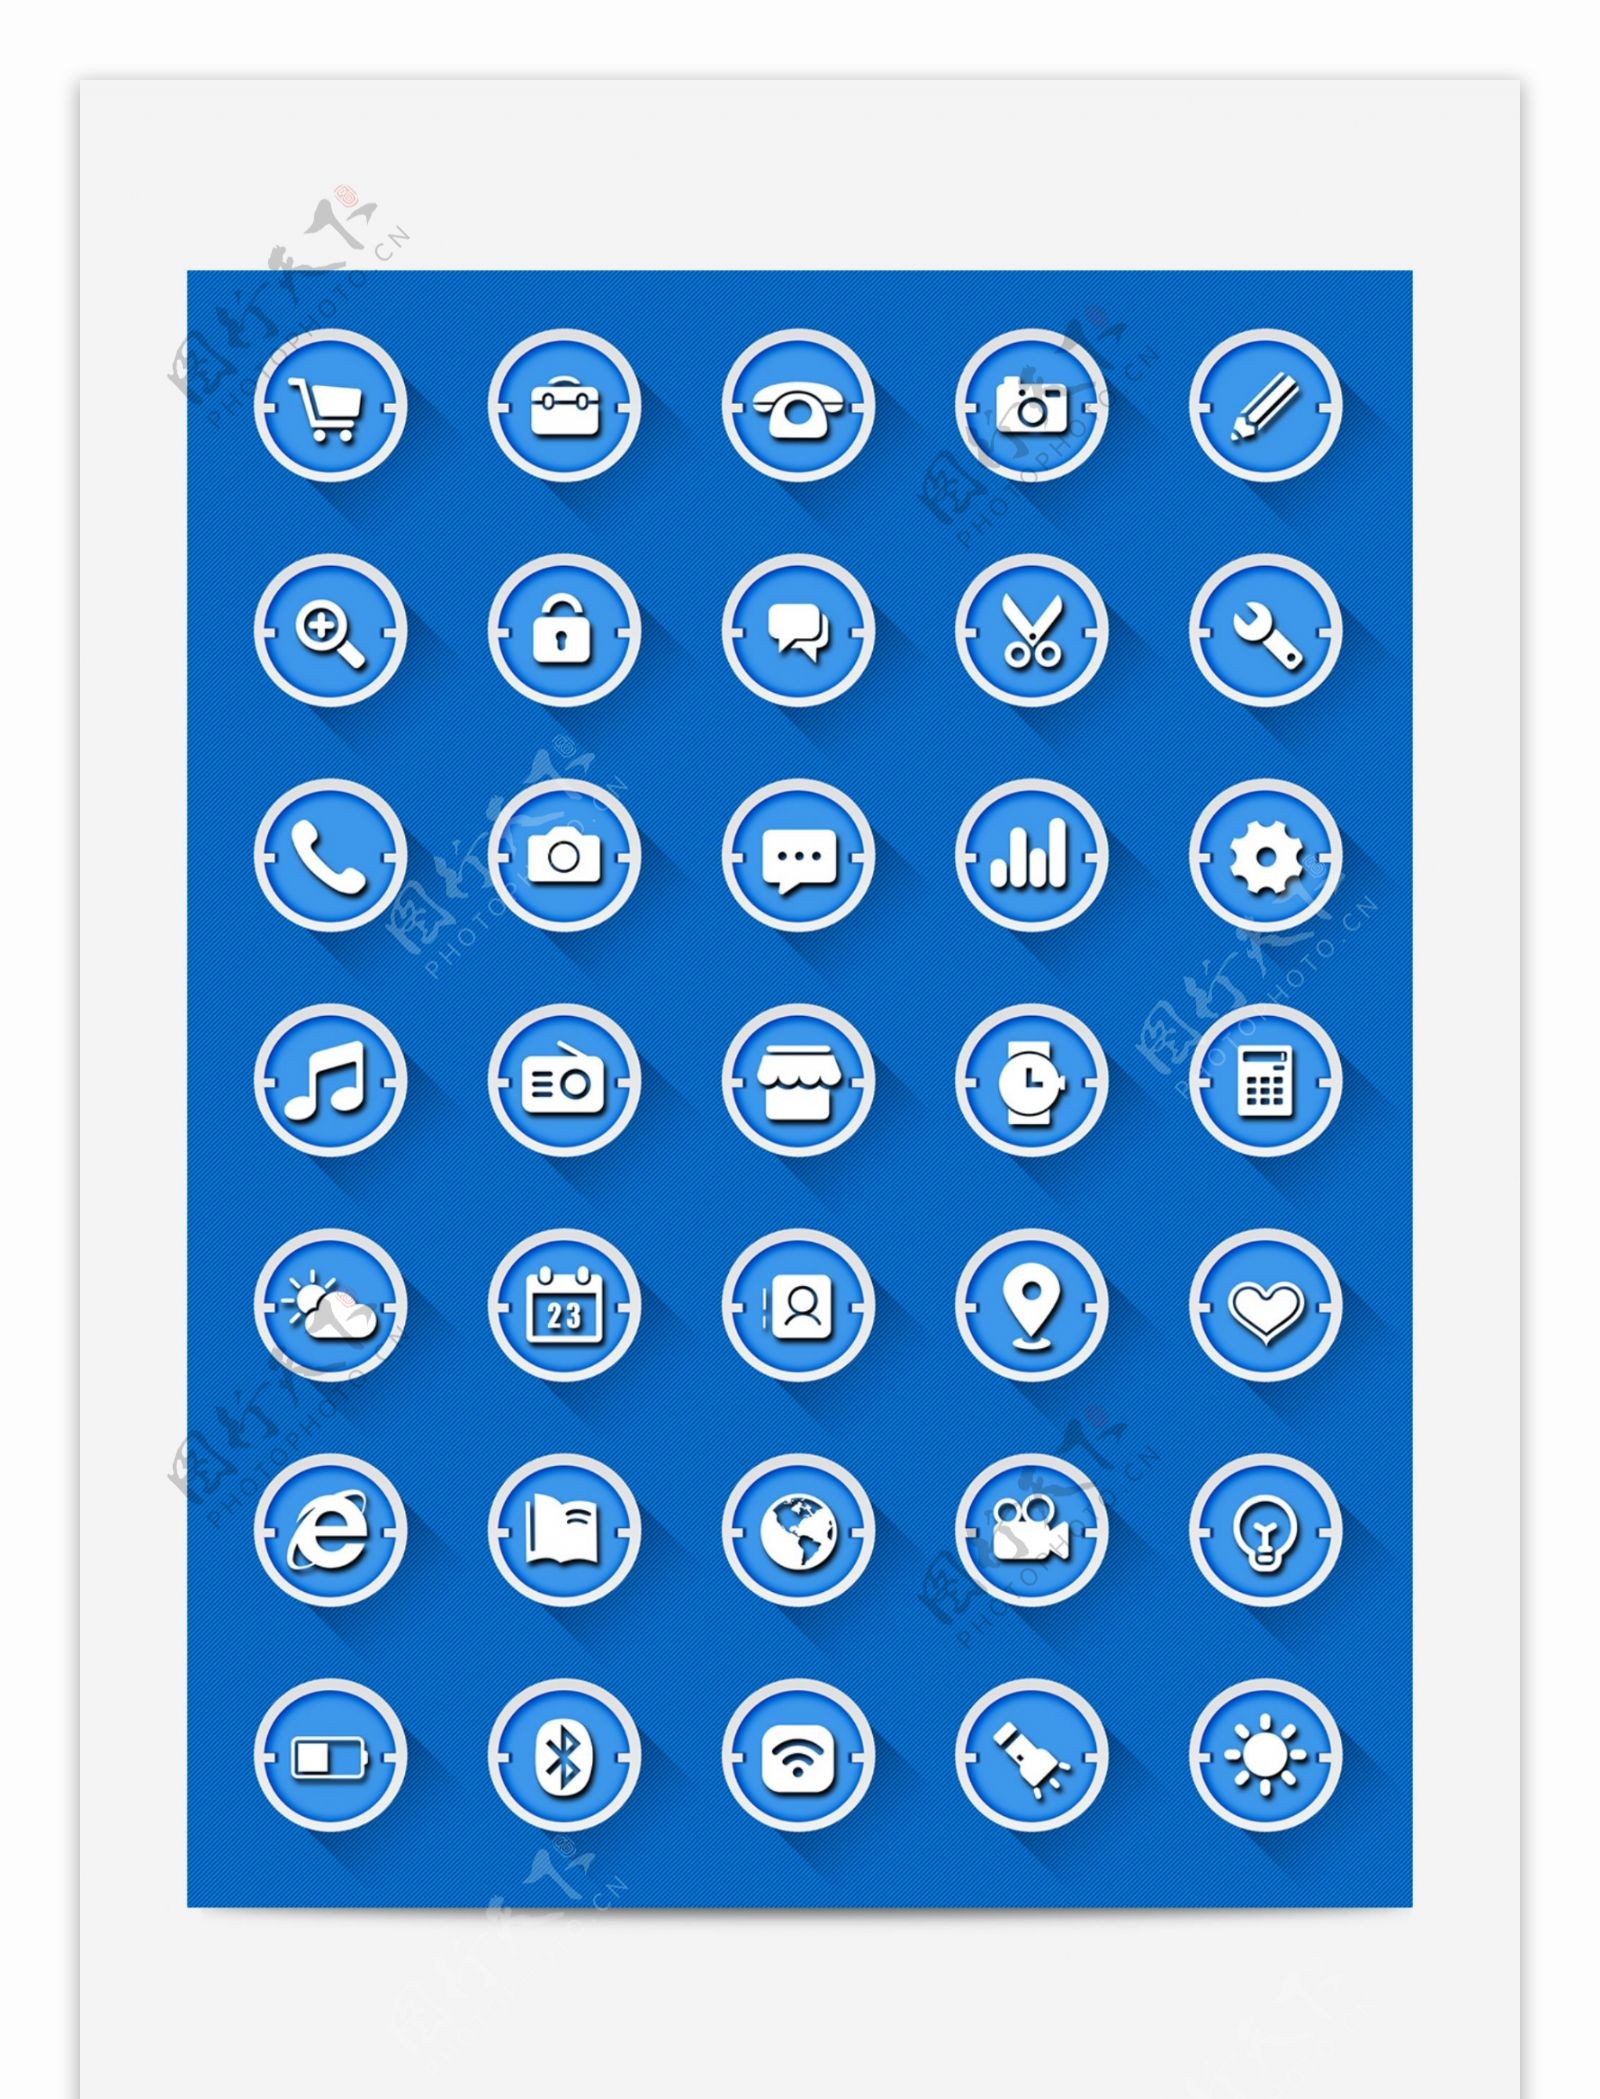 蓝色剪纸风格icon图标